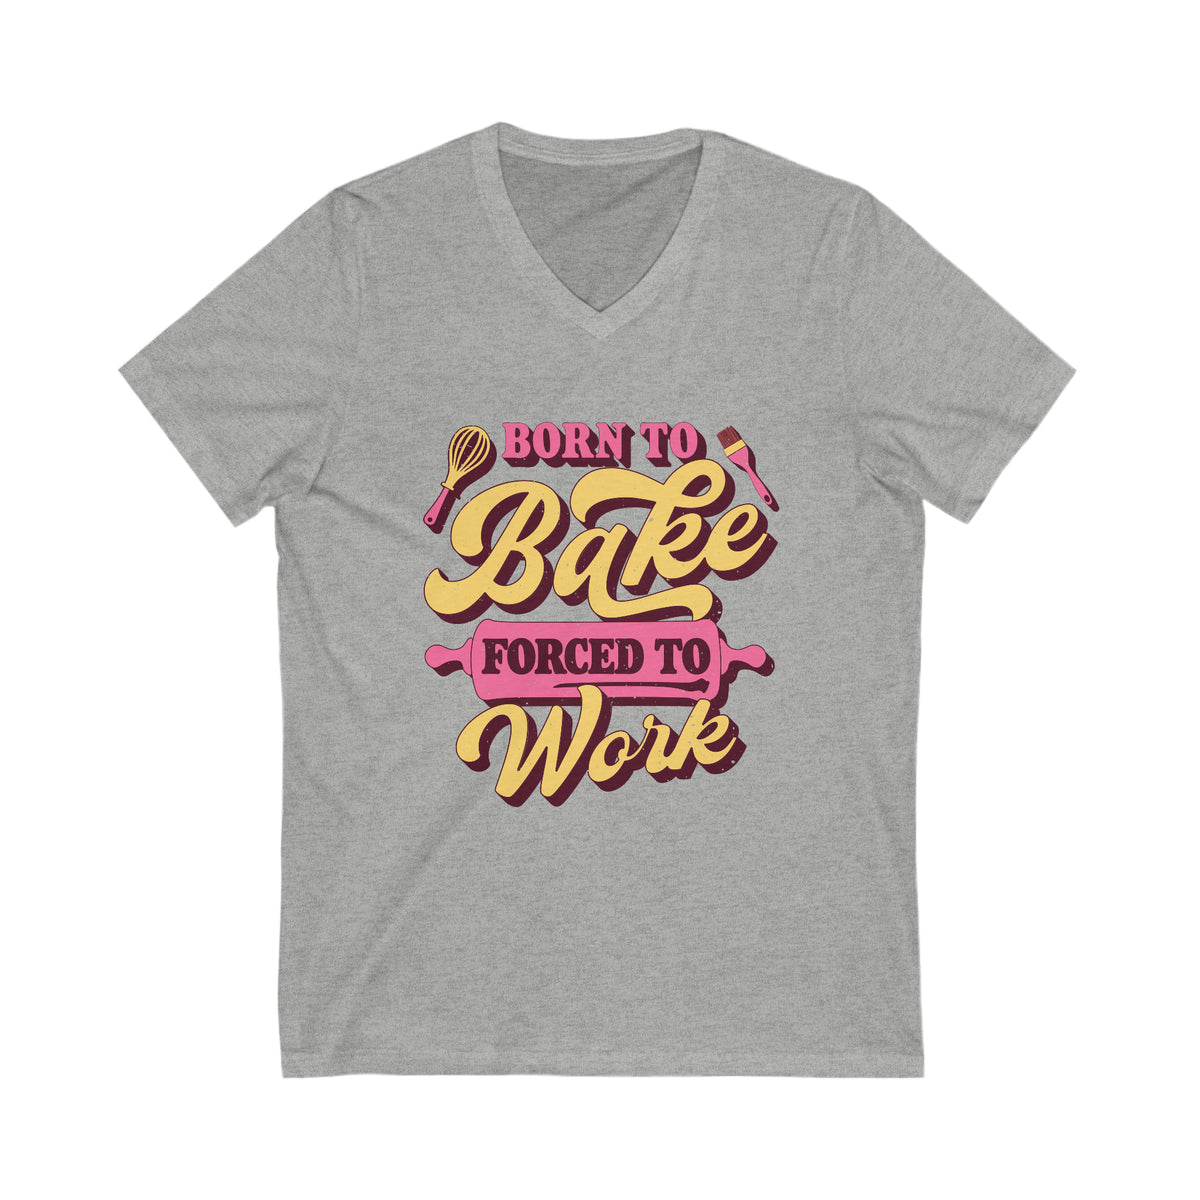 Born To Bake Funny Baking Shirt | Forced To Work Gift For Baker | Unisex Jersey V-neck T-shirt